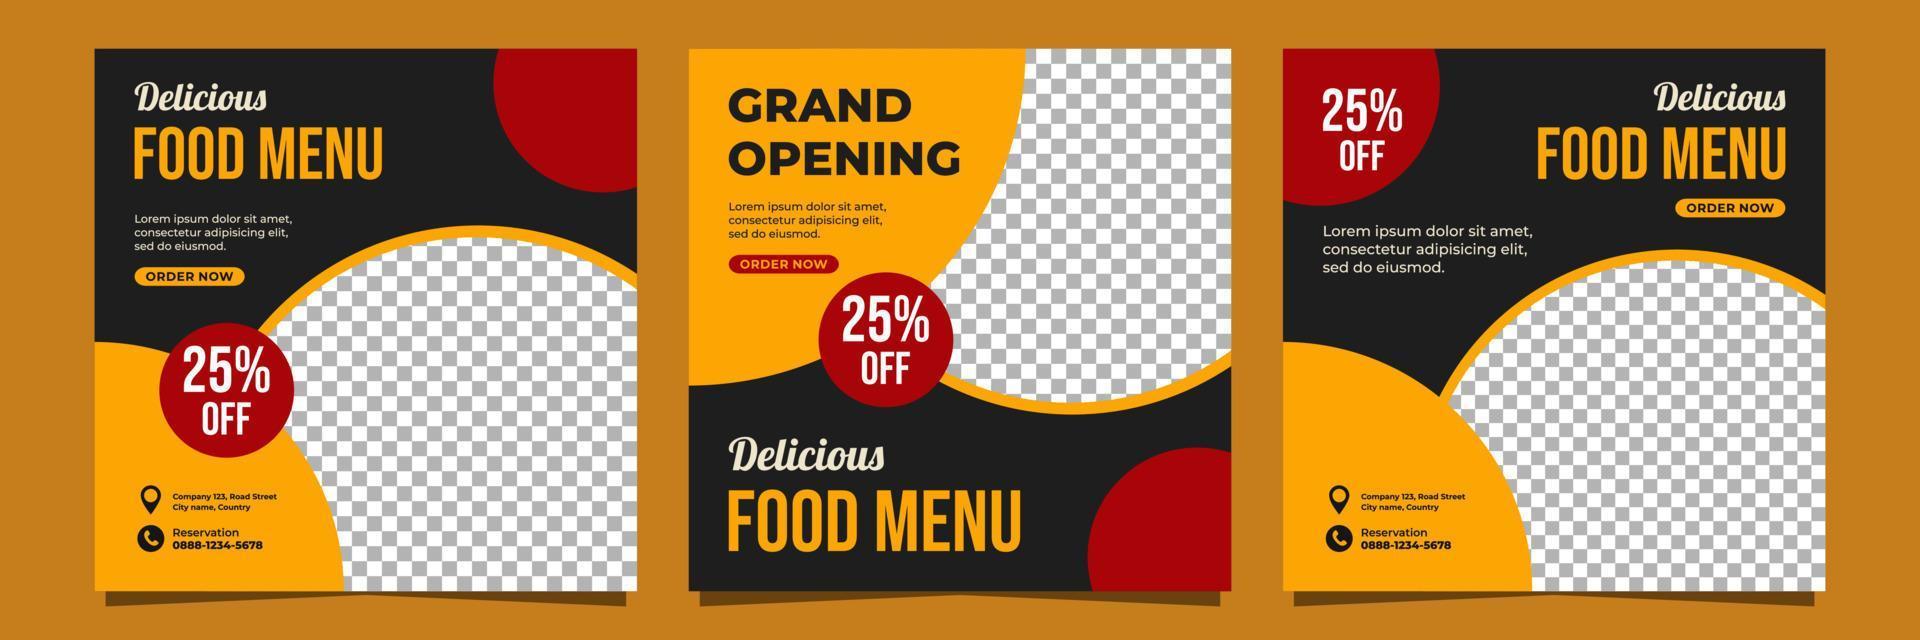 Delicious food menu social media banner template design vector